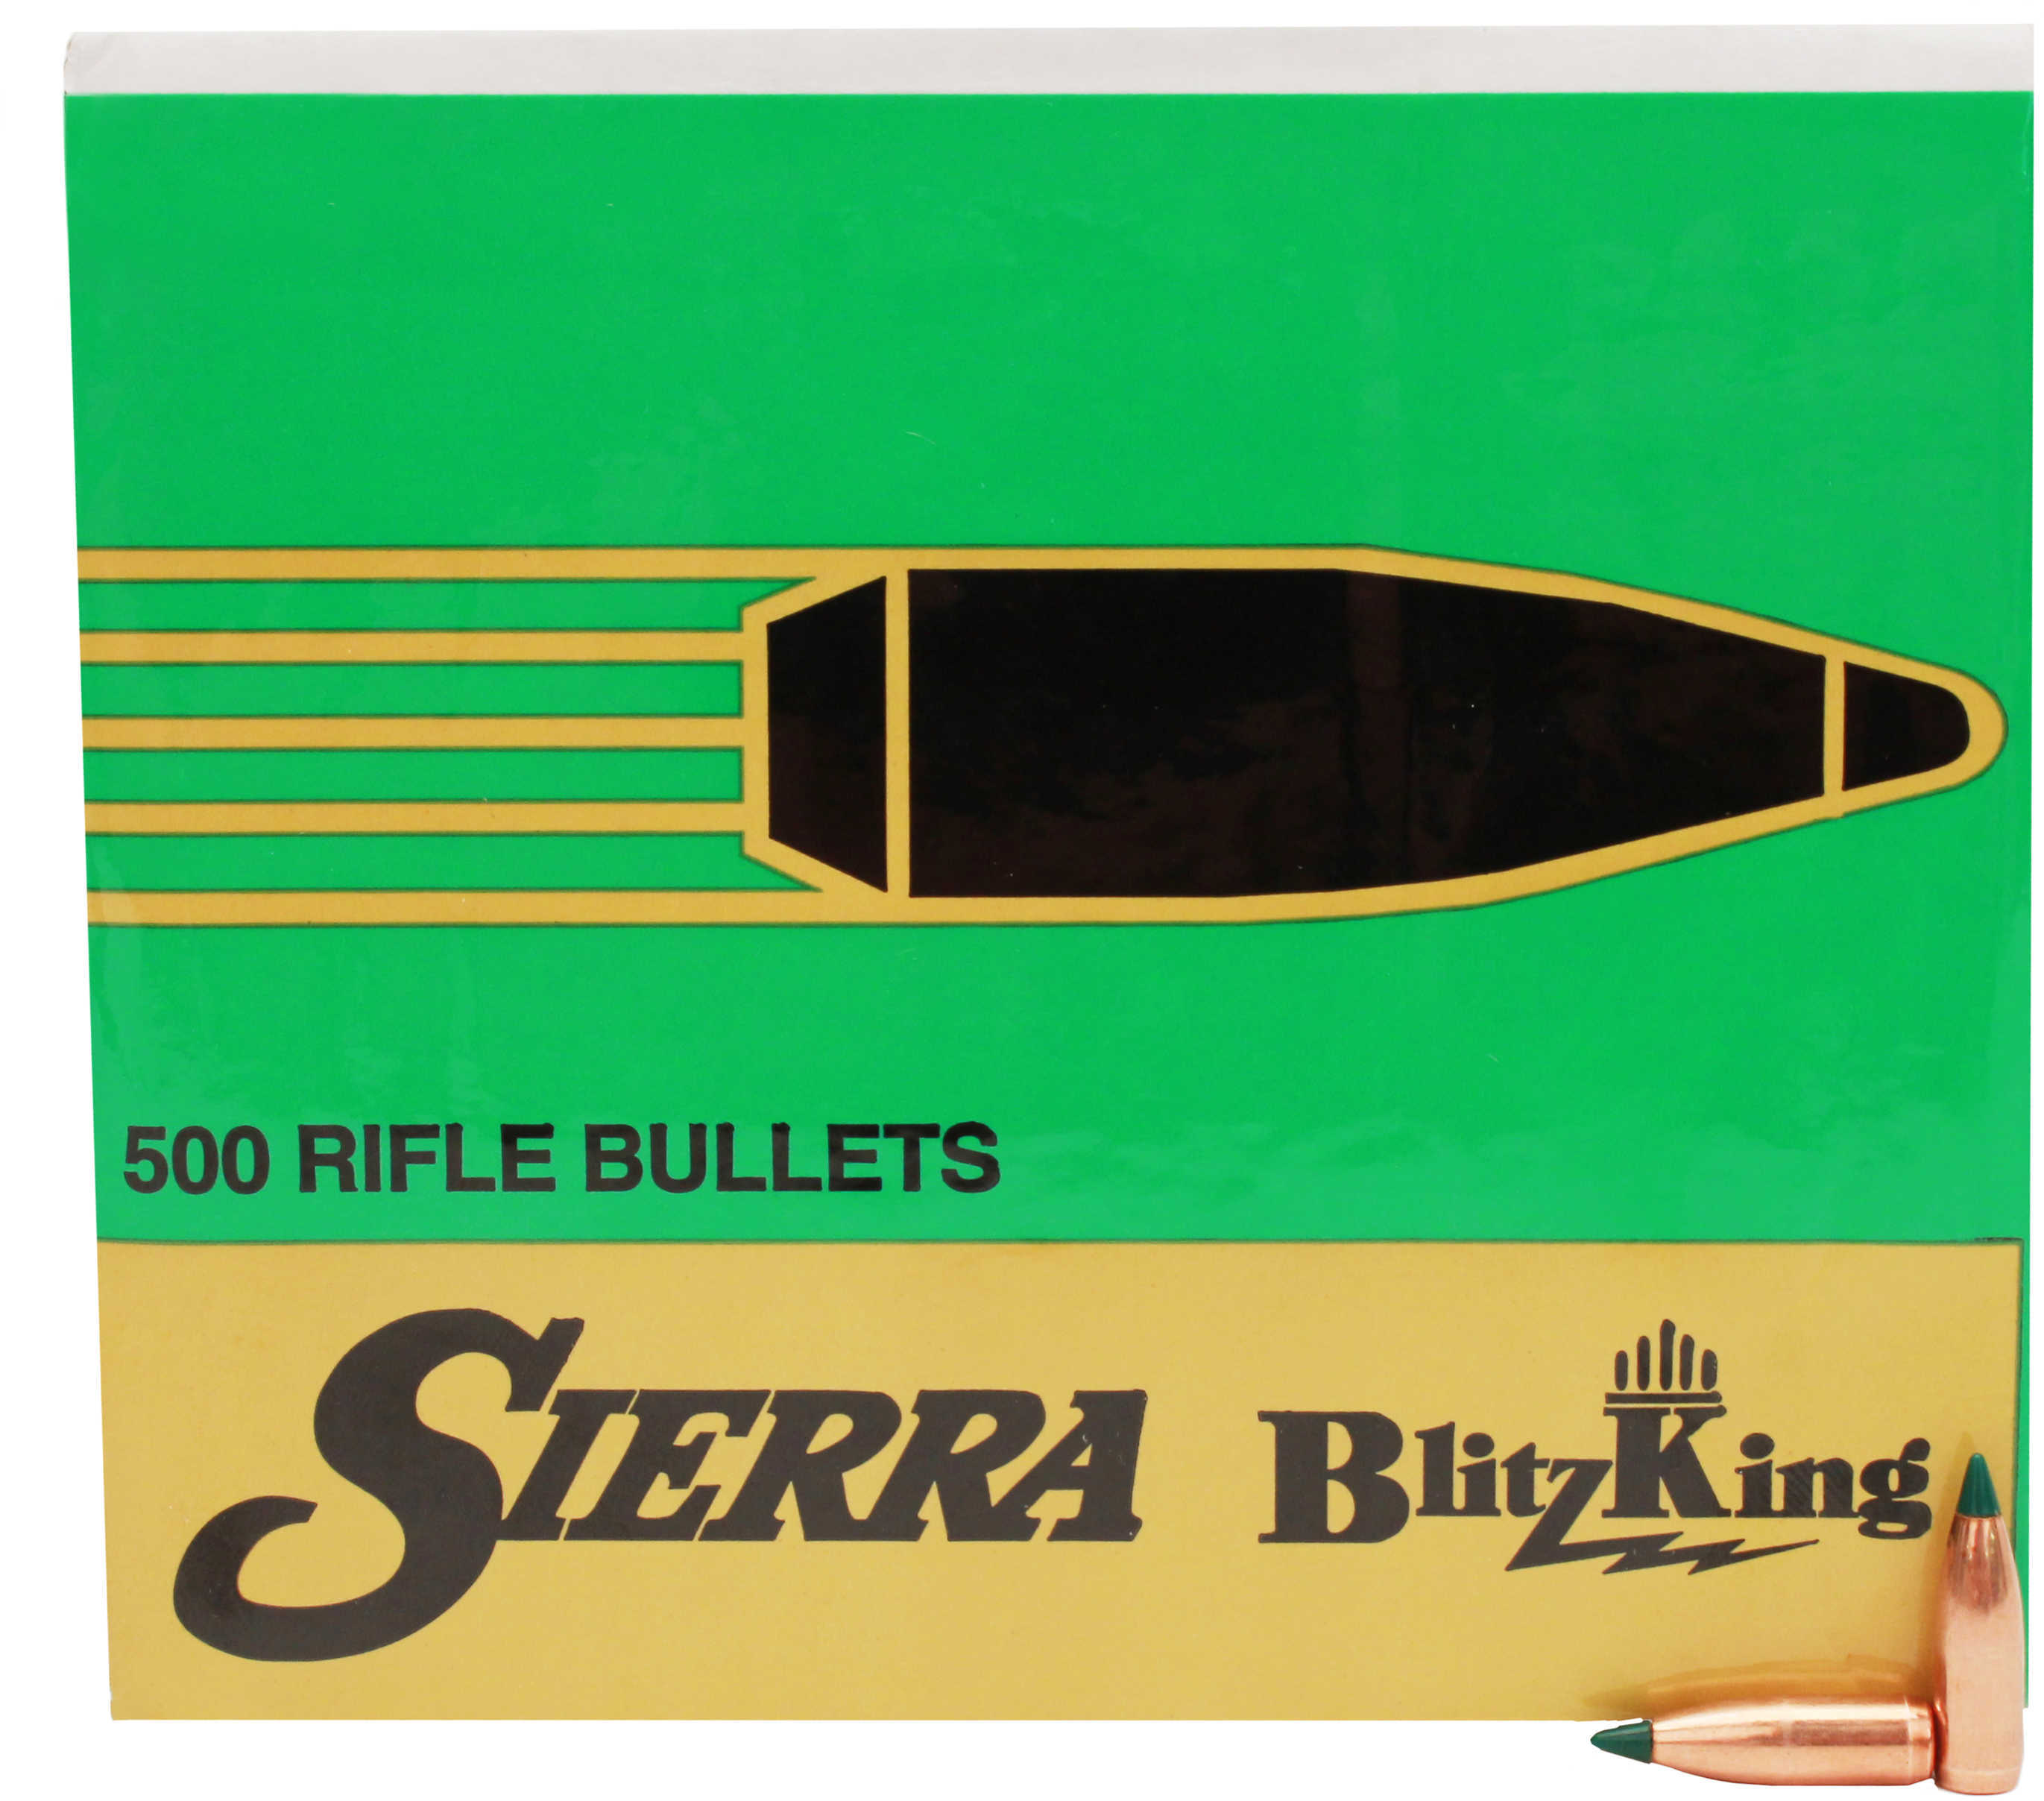 Blitzking 22 Caliber (0.224'') Boat Tail Bullets